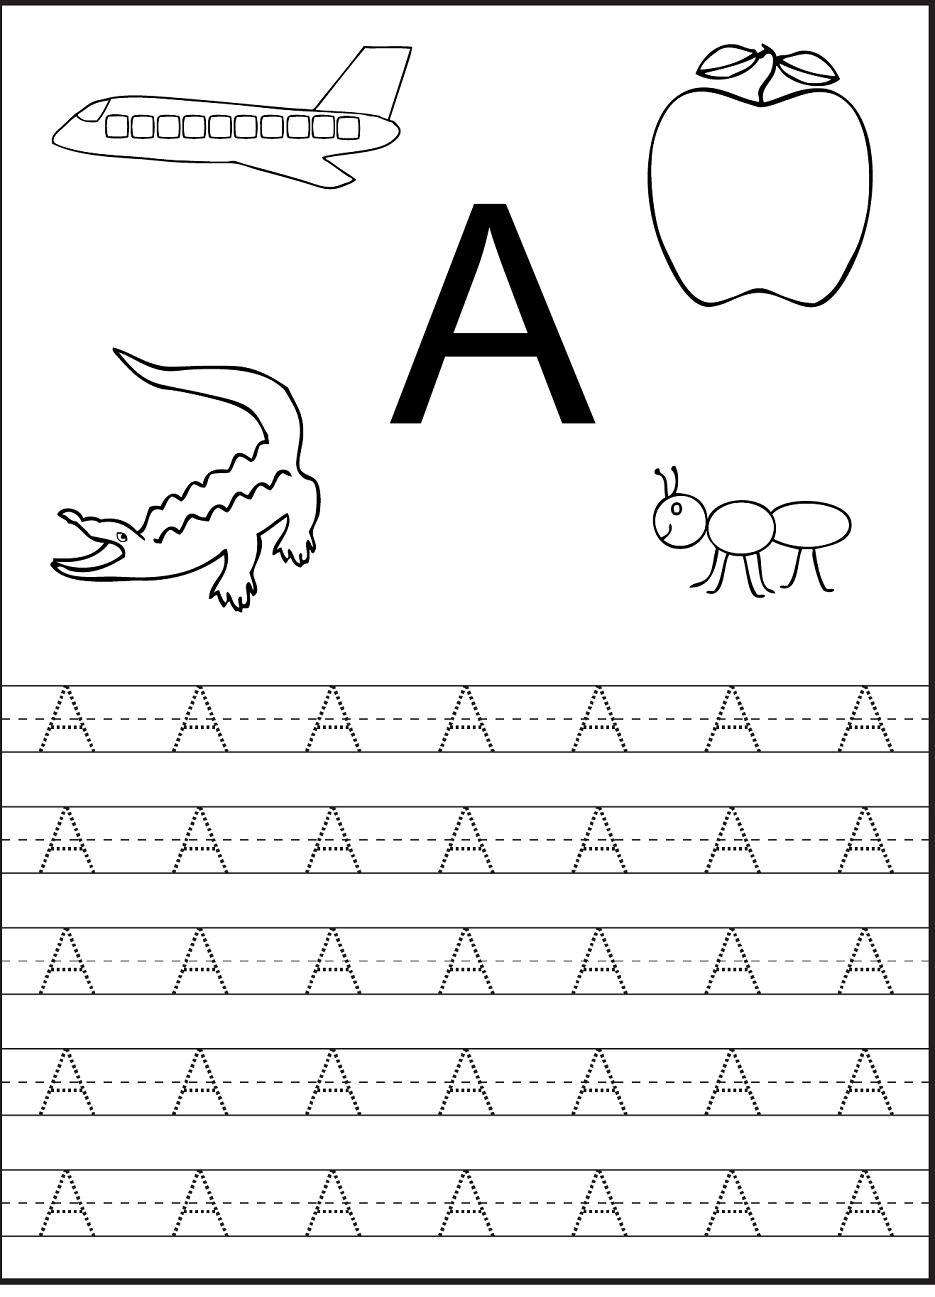 Preschool Worksheet Alphabet To Educations. Alphabet with Preschool Alphabet I Worksheets